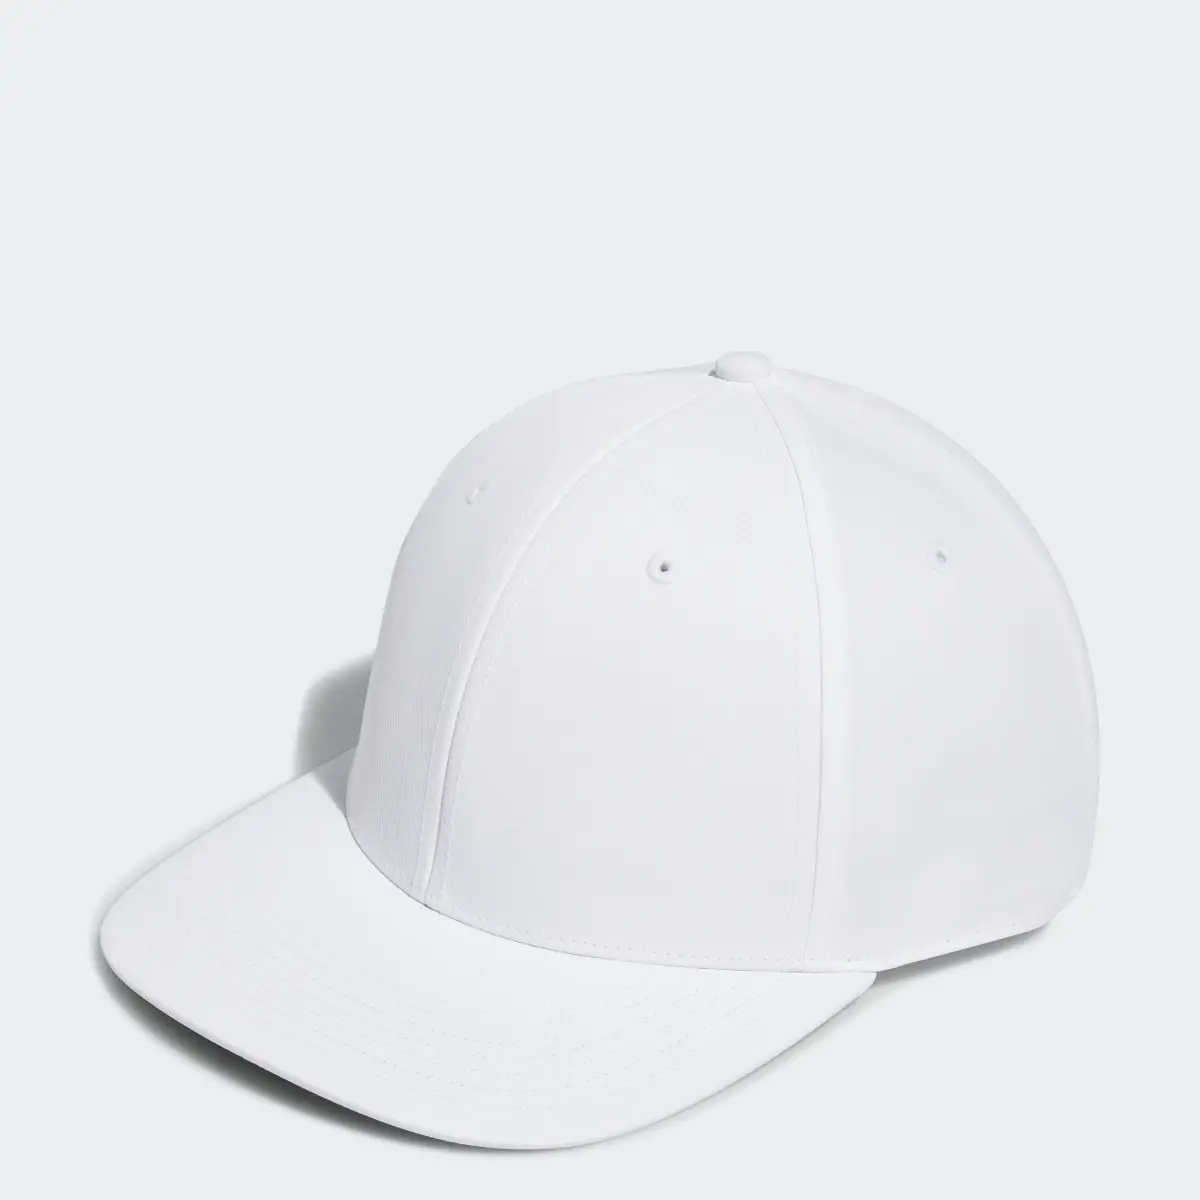 Adidas Crestable Tour Snapback Golf Hat. 1